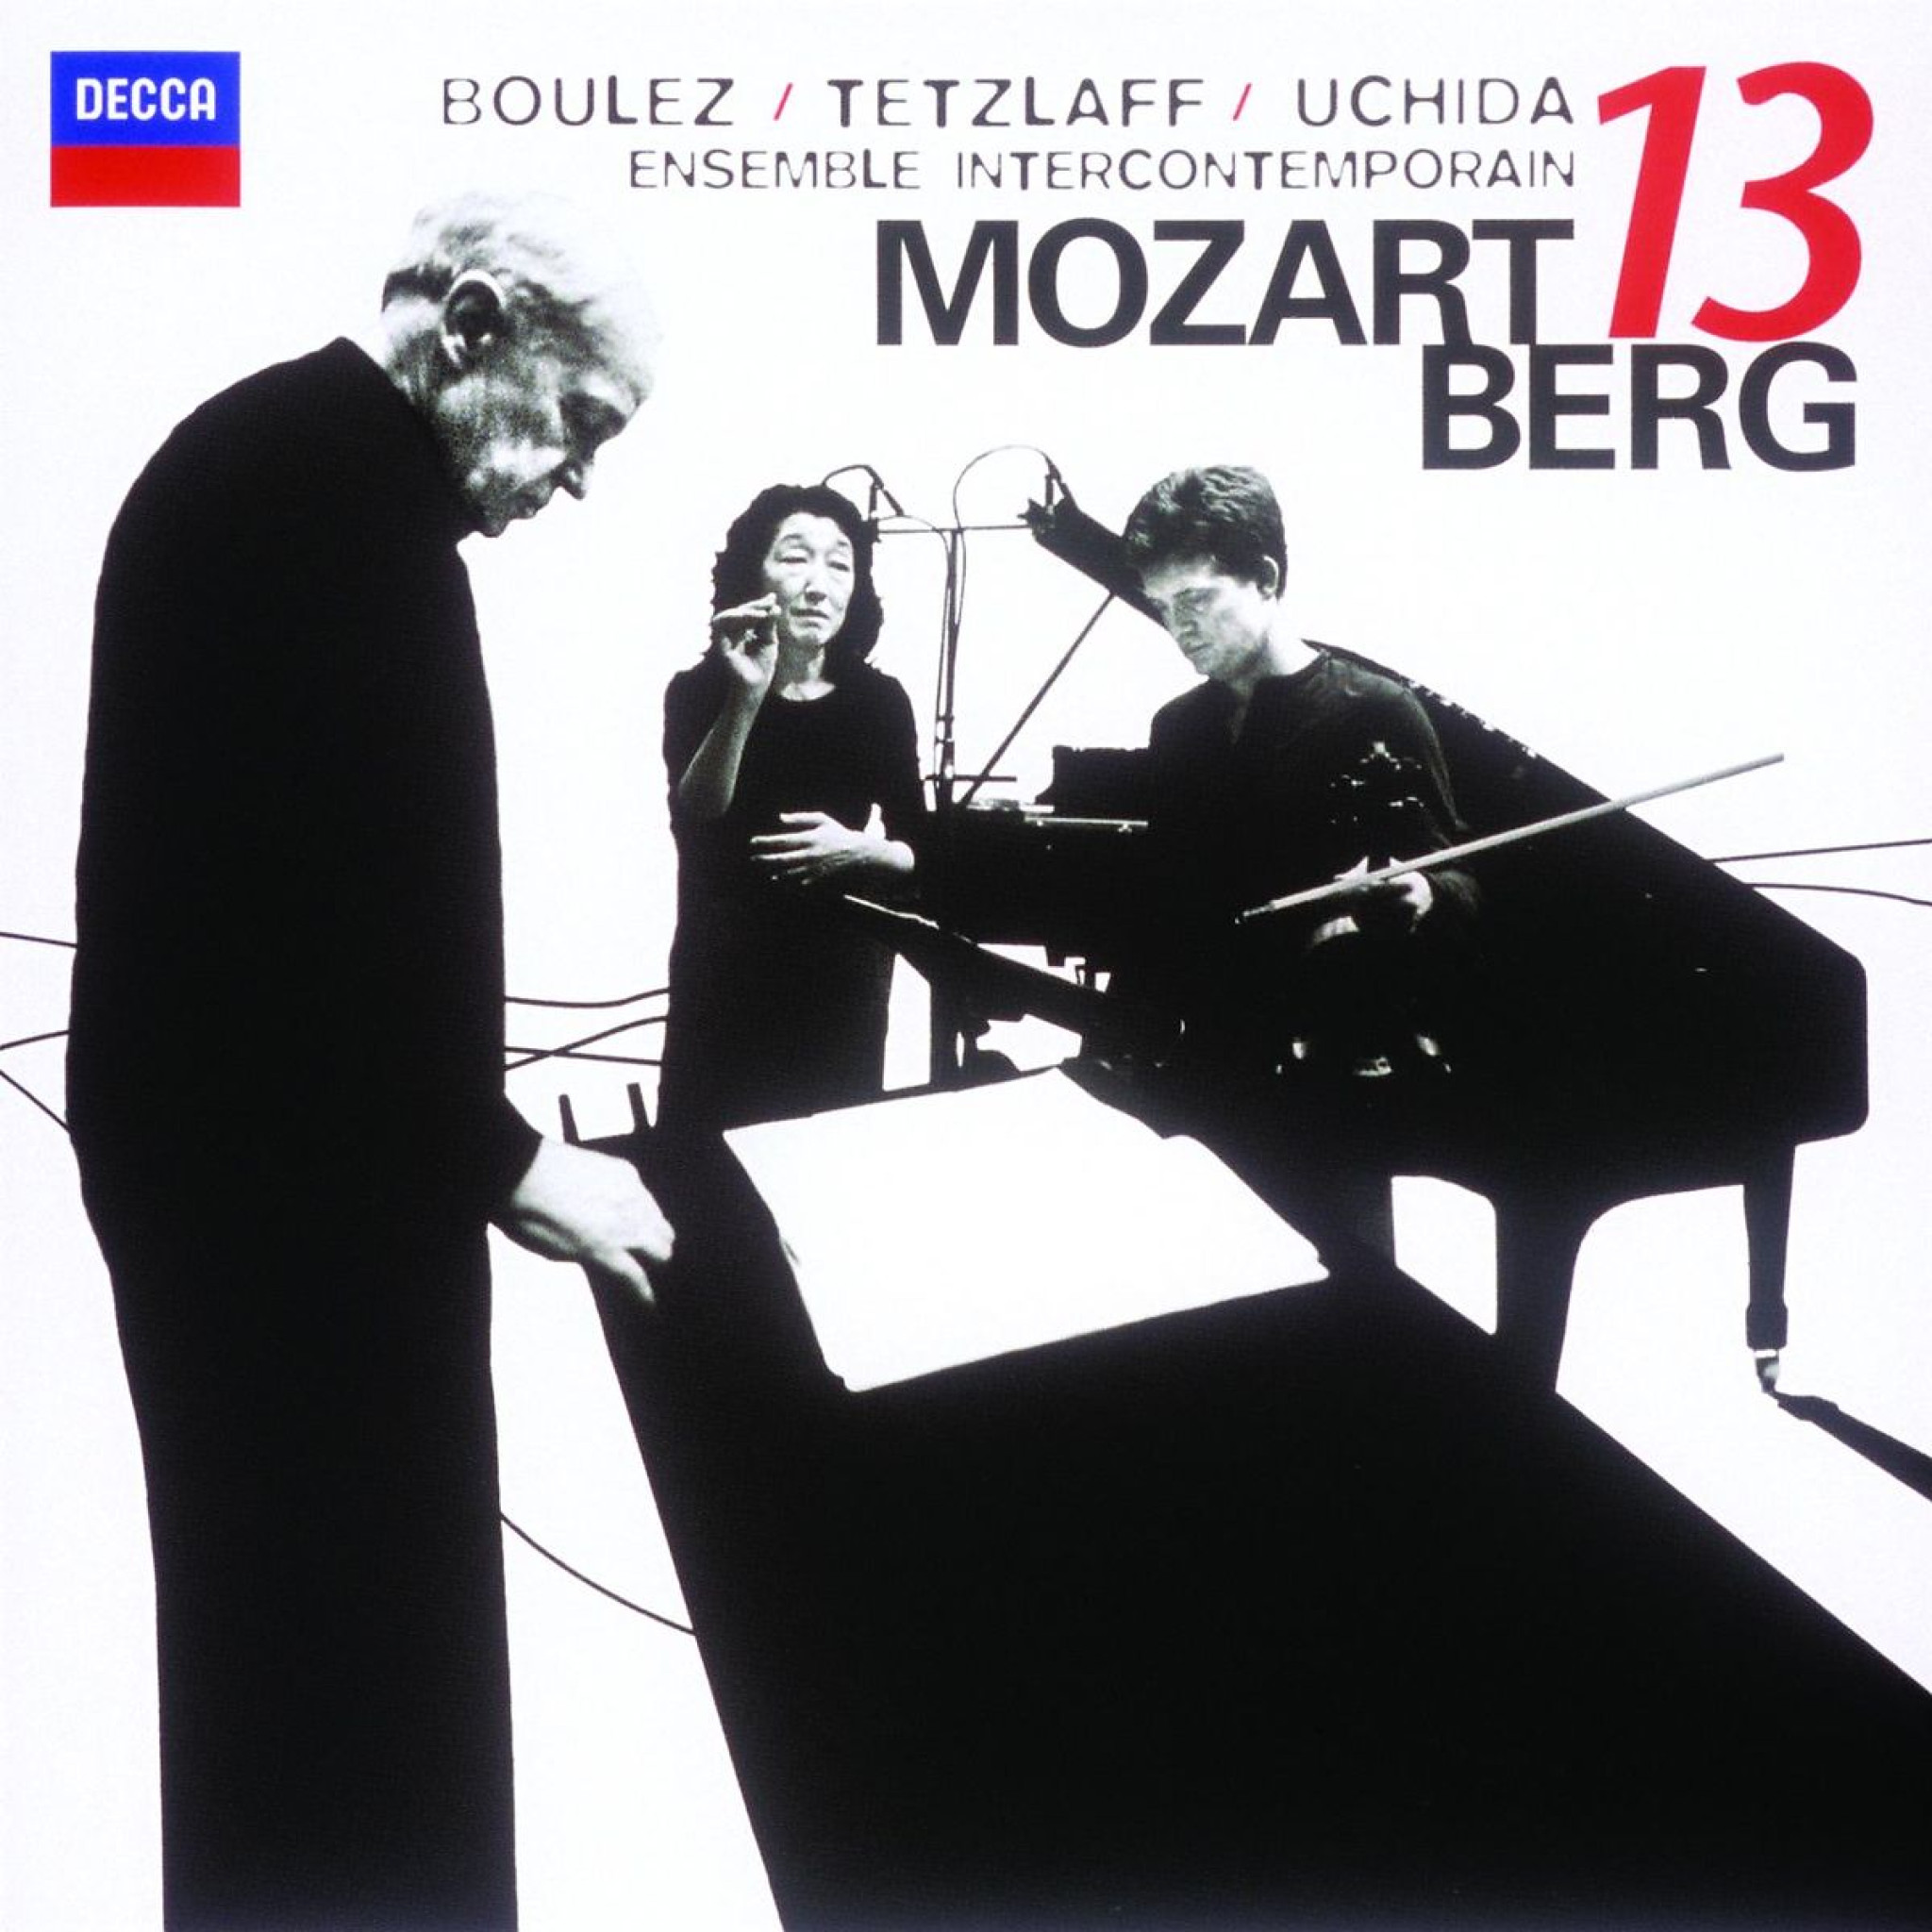 MOZART, BERG / Tetzlaff, Uchida, Boulez